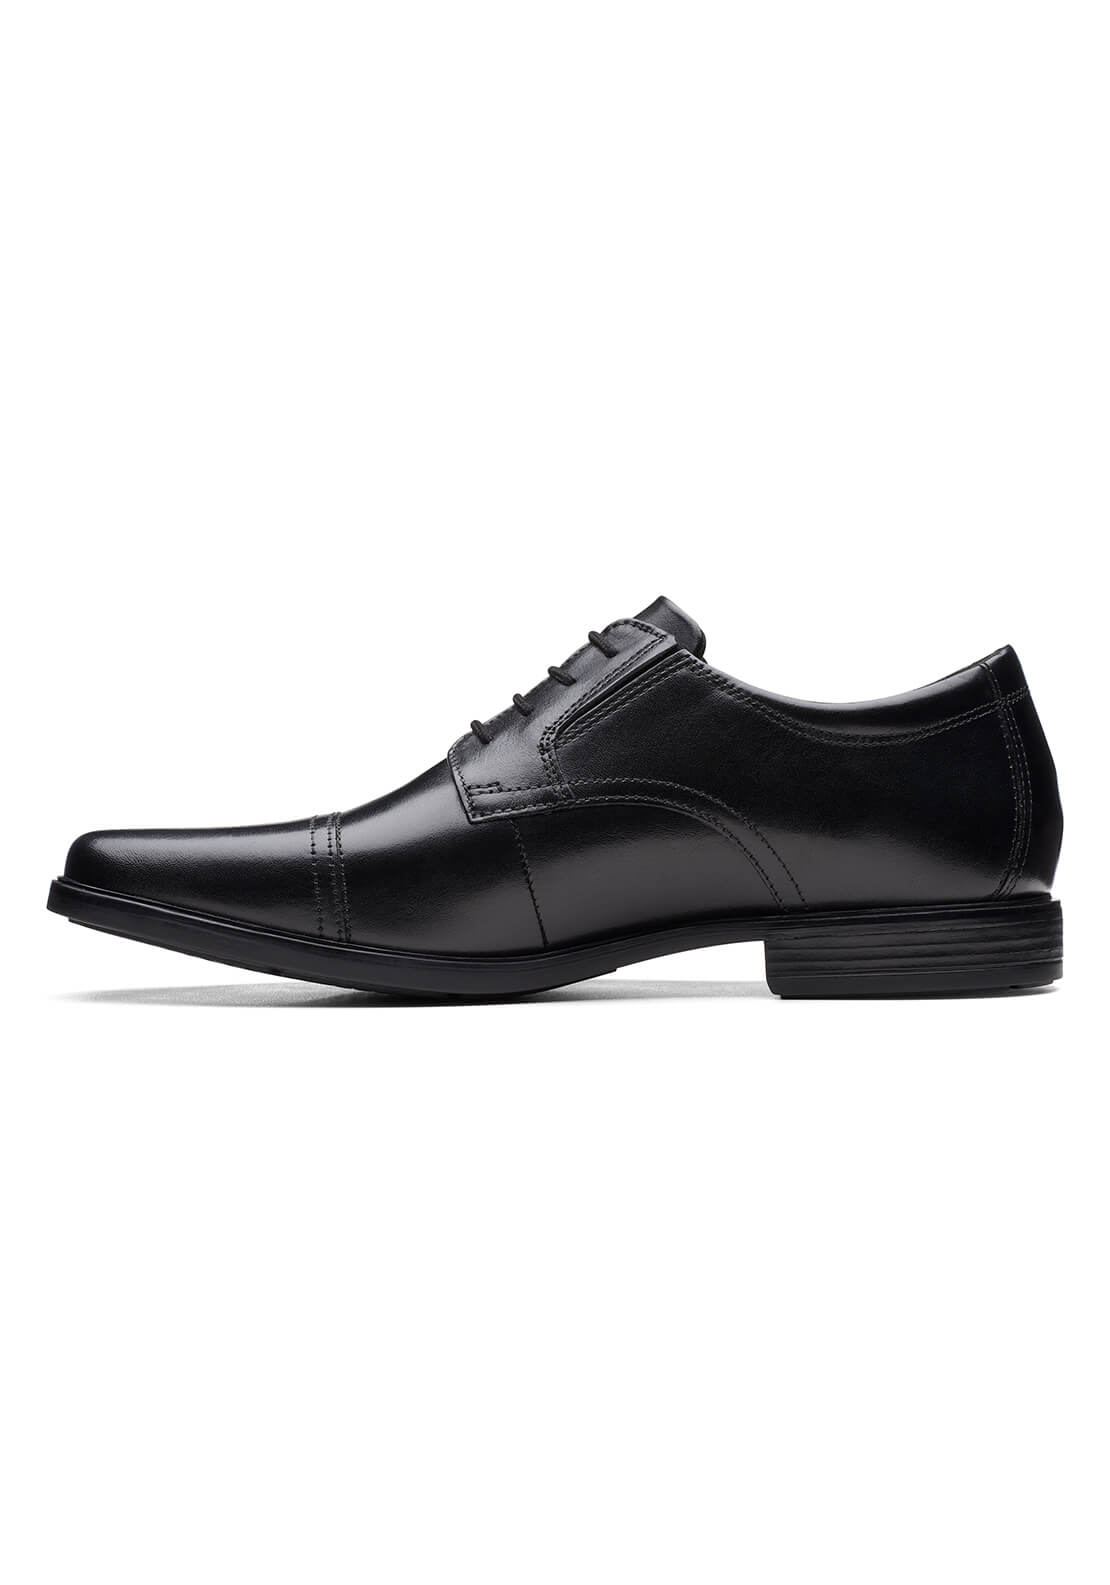 Clarks Howard Cap Formal Shoe - Black 3 Shaws Department Stores